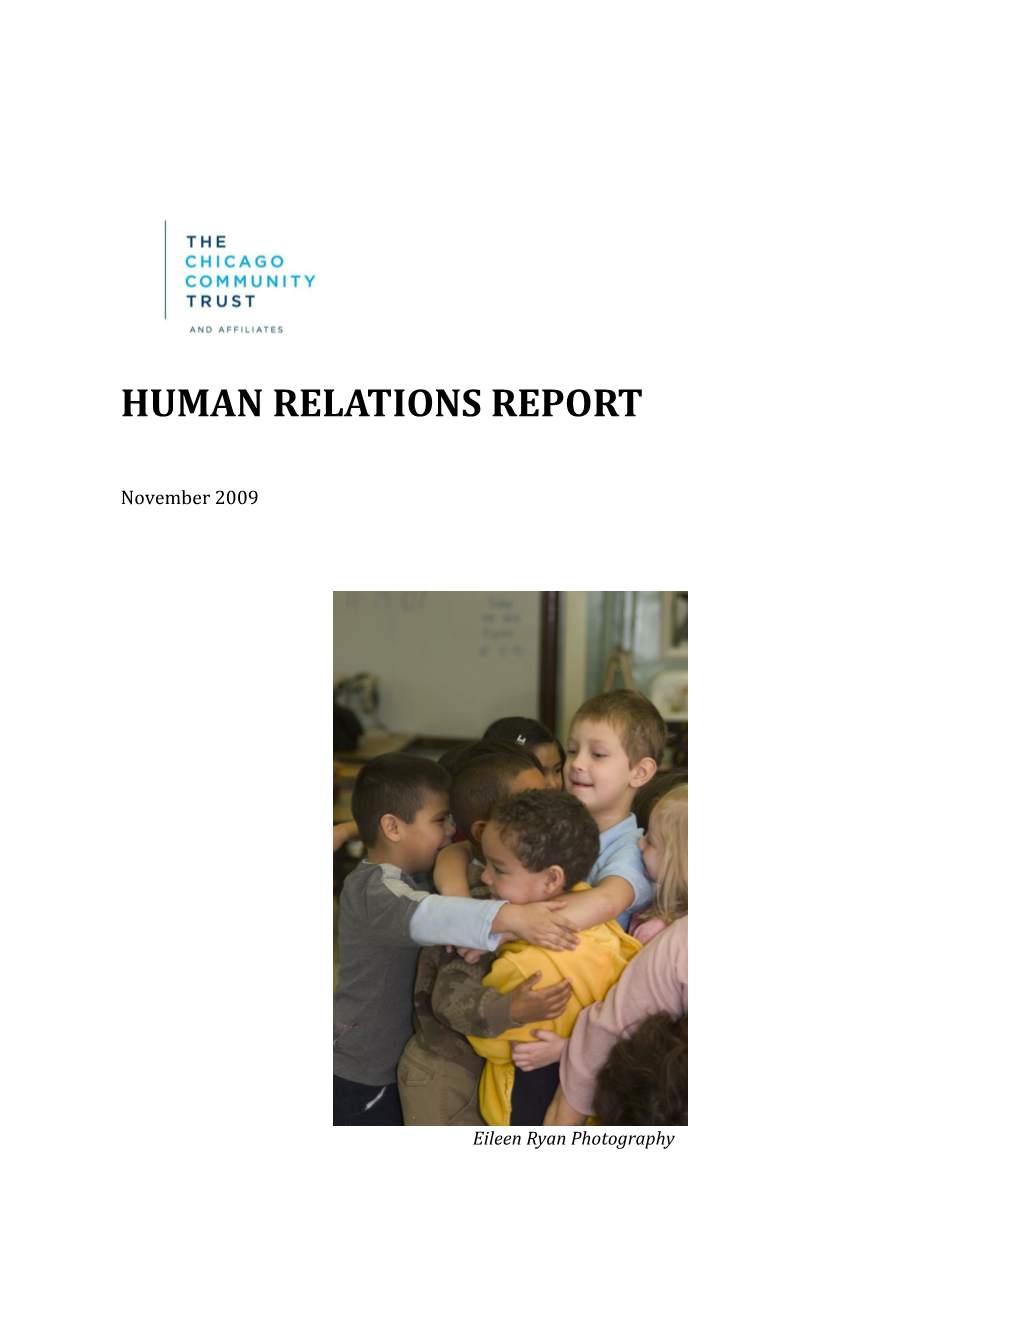 Human Relations Report